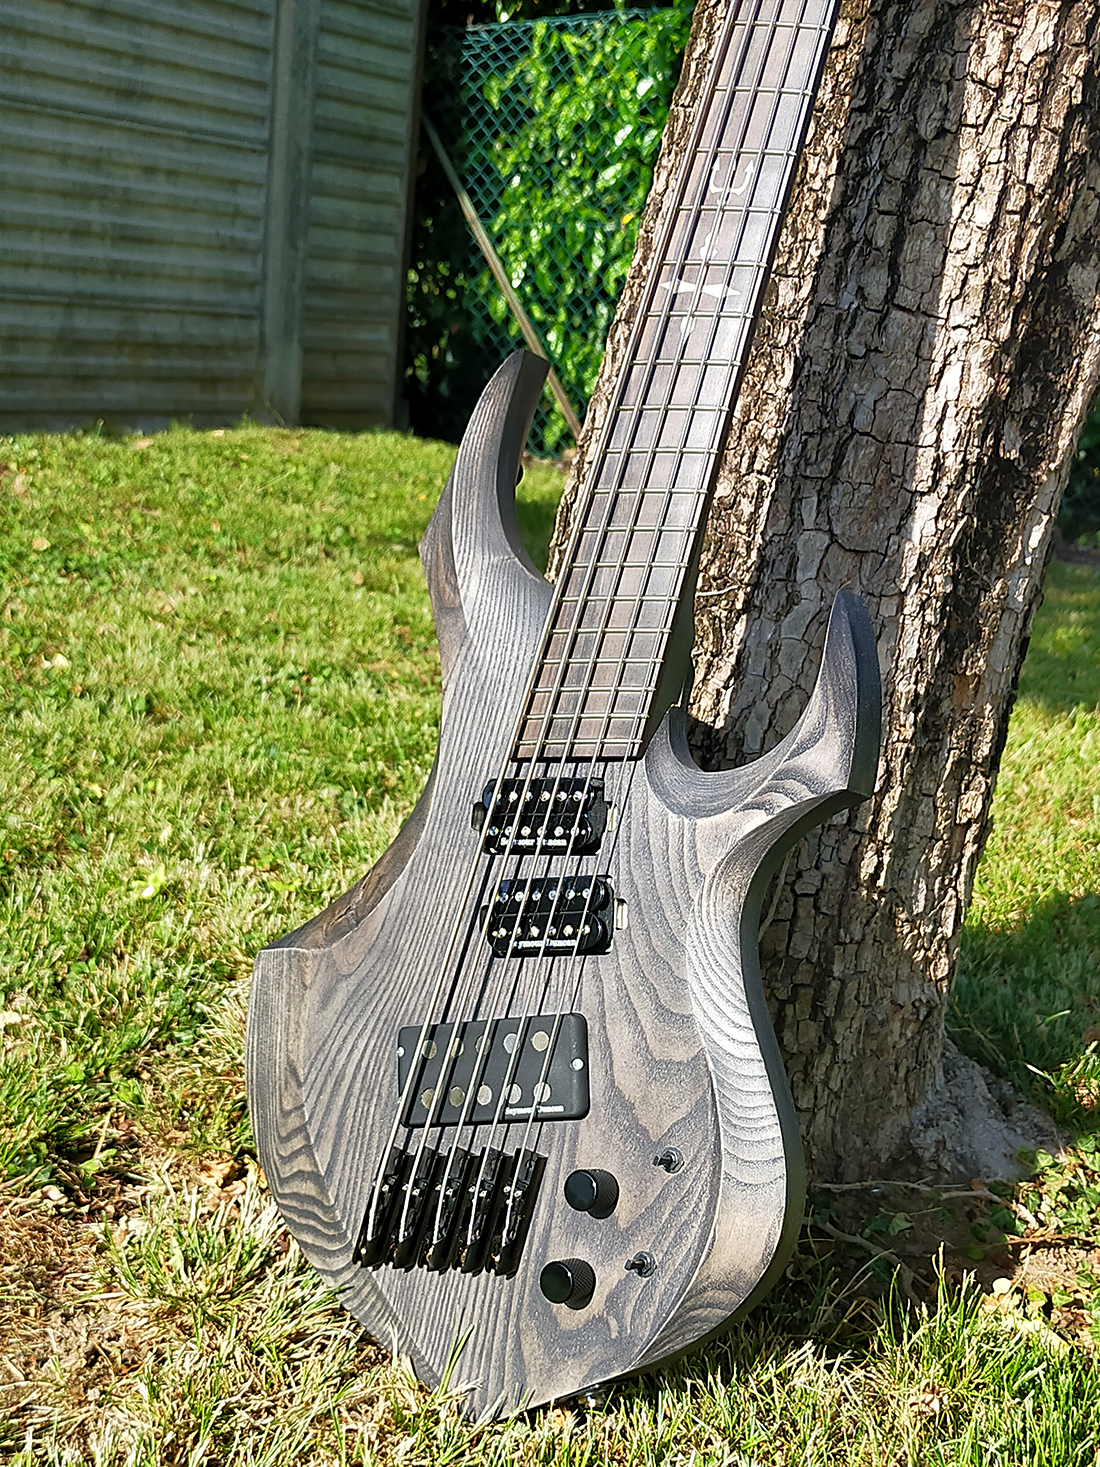 LV-426 Bass “Dis-Agio” 5 strings fanned